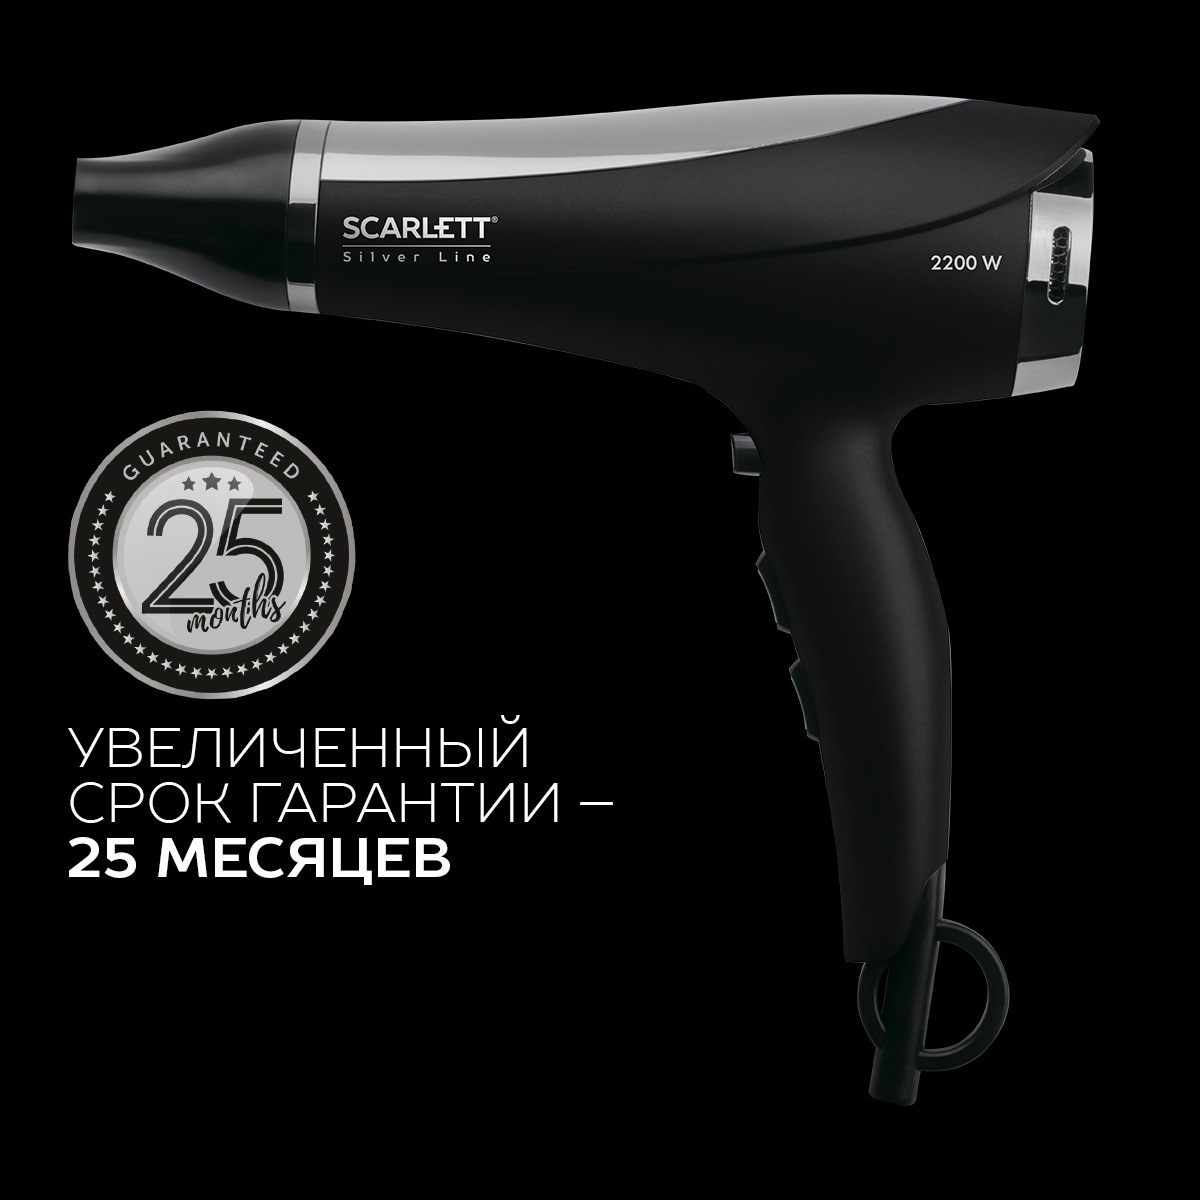 Фен для волос Scarlett SC-HD70I76, 2200 Вт, коллекция Silver Line, черный  #1